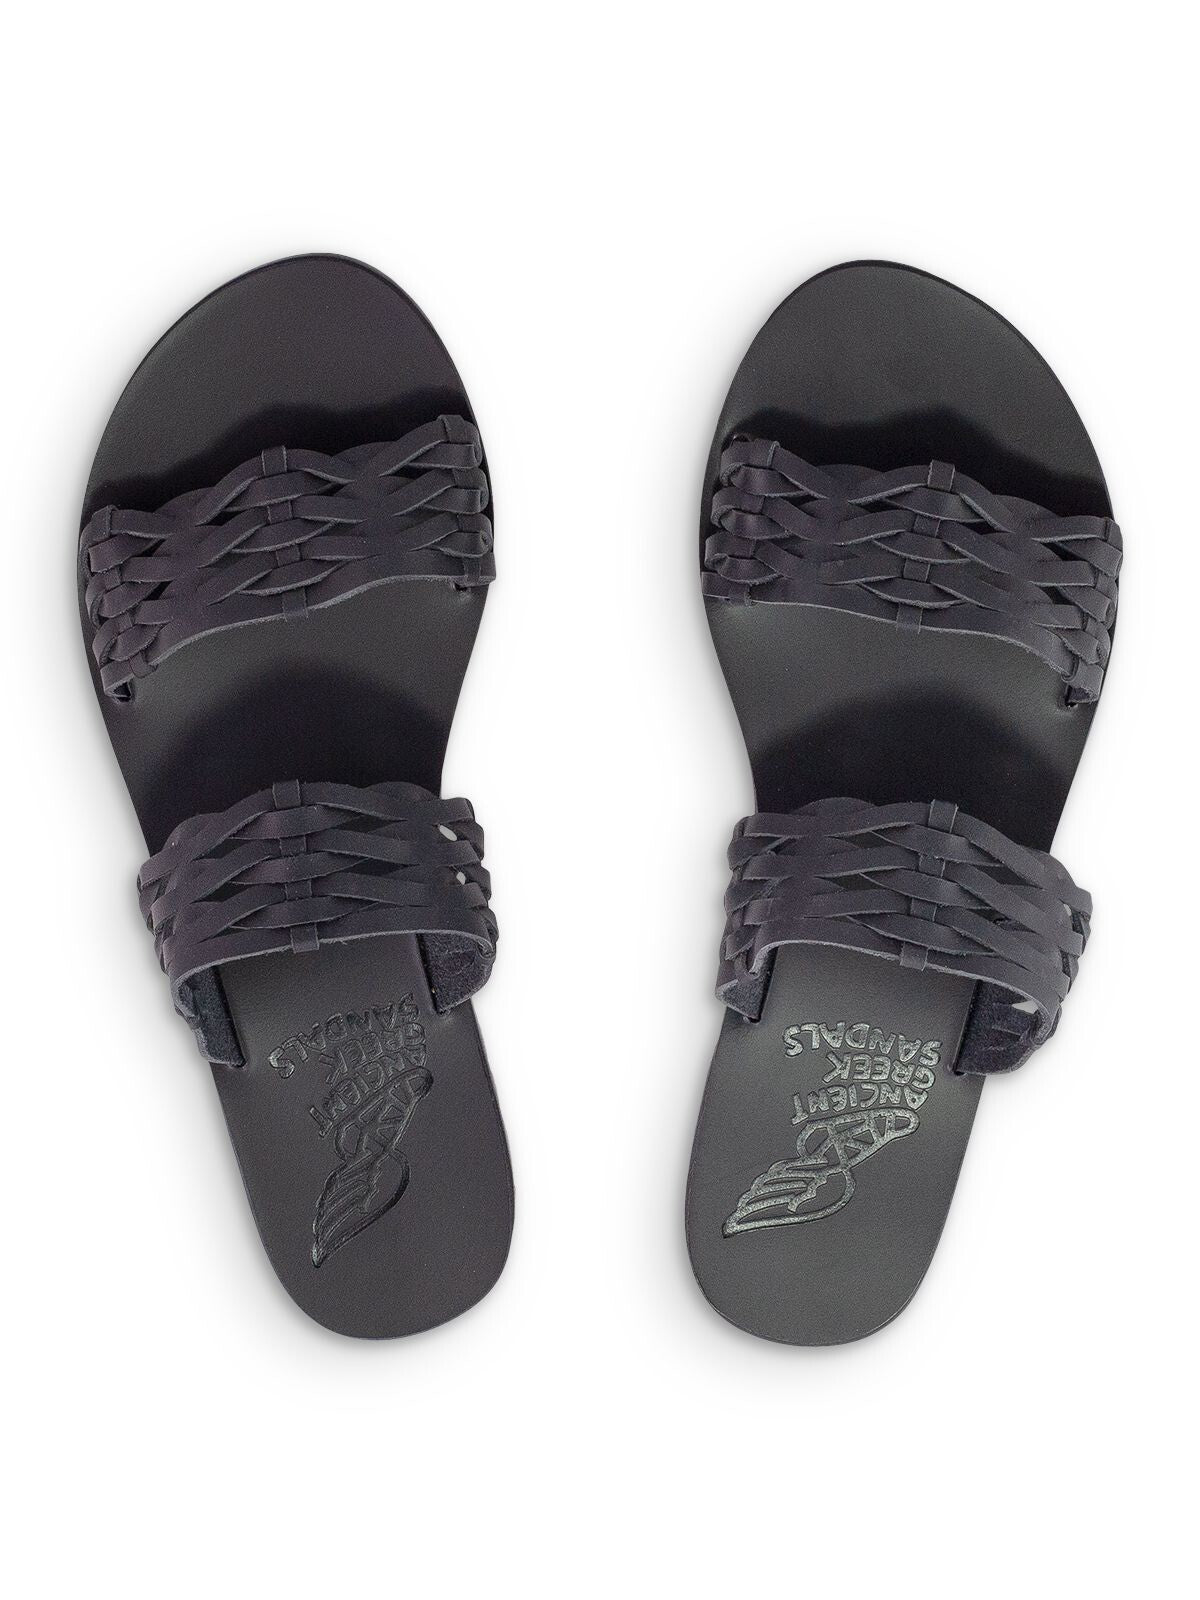 ANCIENT GREEK SANDALS Womens Black Woven Melia Round Toe Slip On Leather Slide Sandals Shoes 36